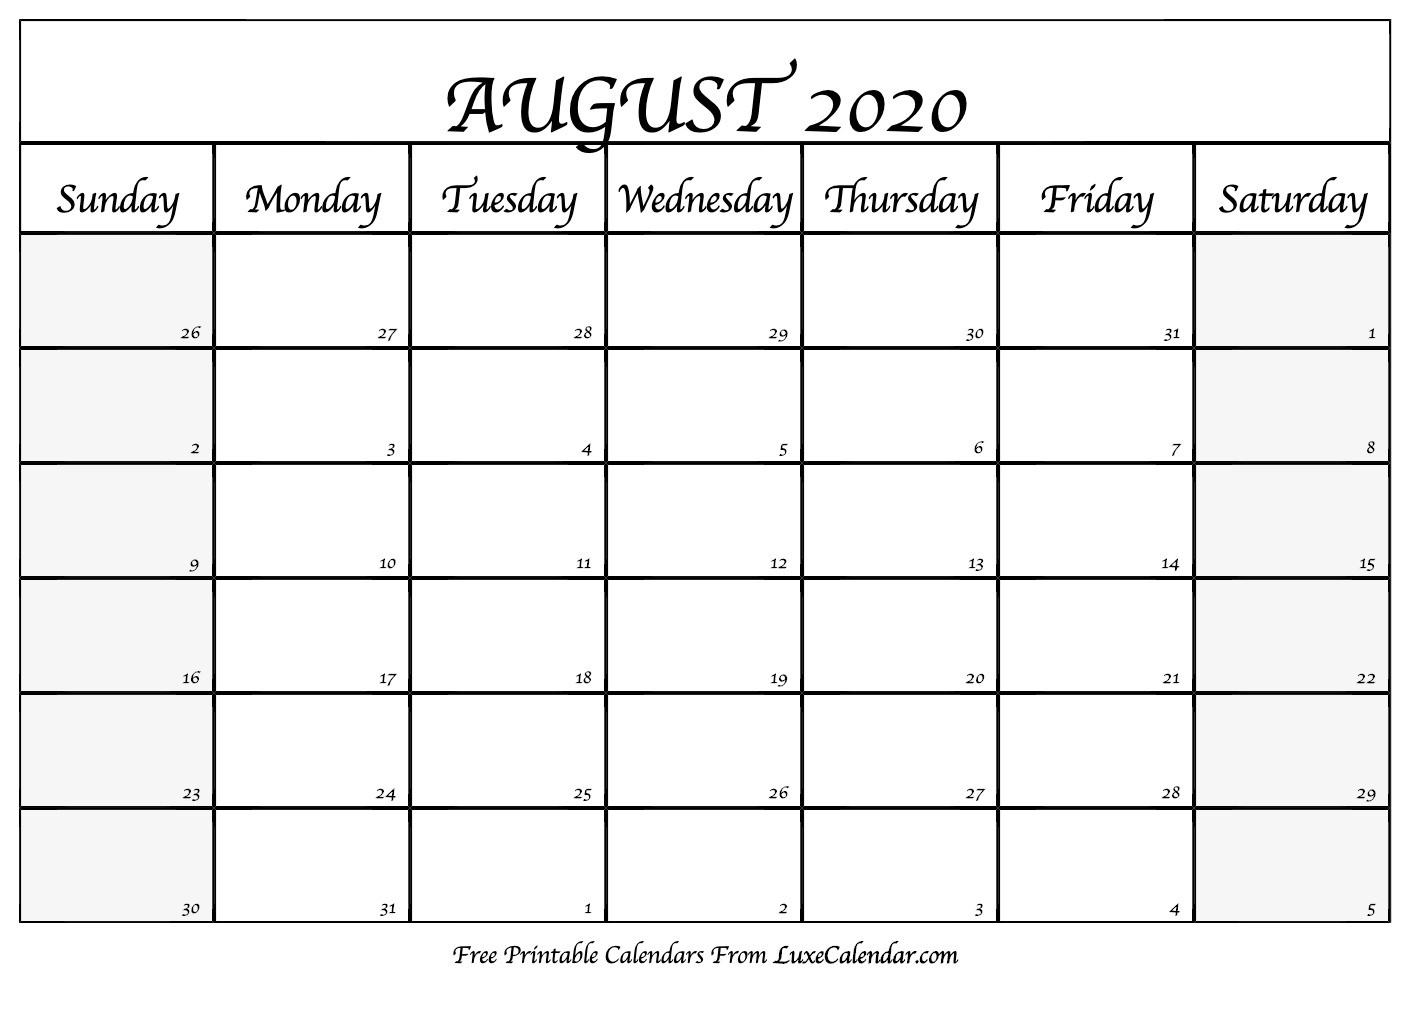 Blank August 2020 Calendar Printable - Luxe Calendar-Luxe Calendar Aug 2020 Blank Printable